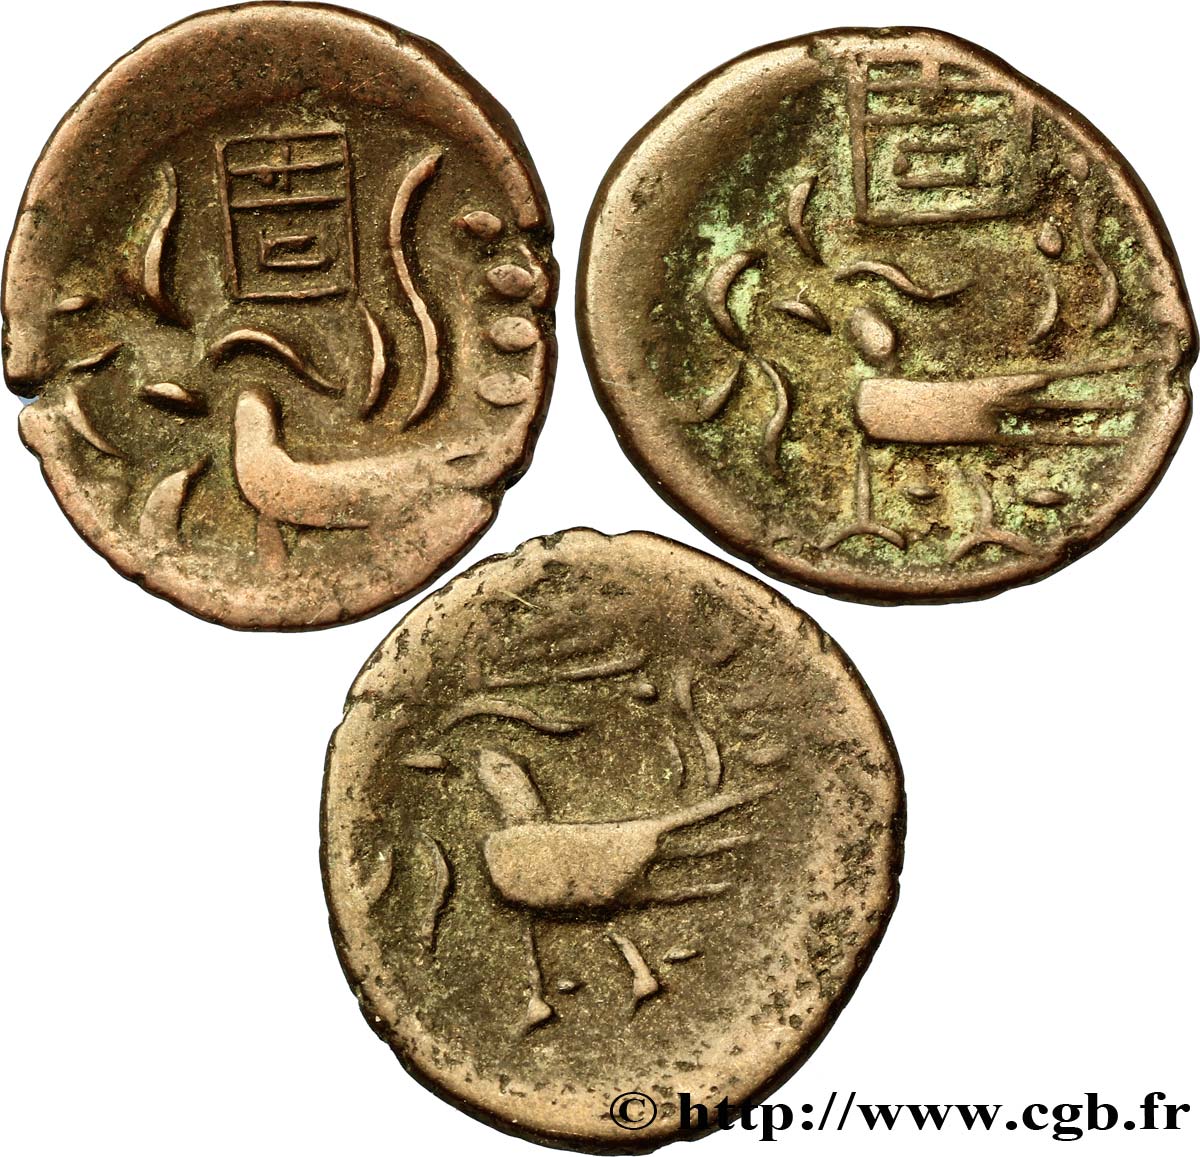 KAMBODSCHA Lot de 3 monnaies de 2 Pe - Royaume du Cambodge Ang Duaong n.d  S 